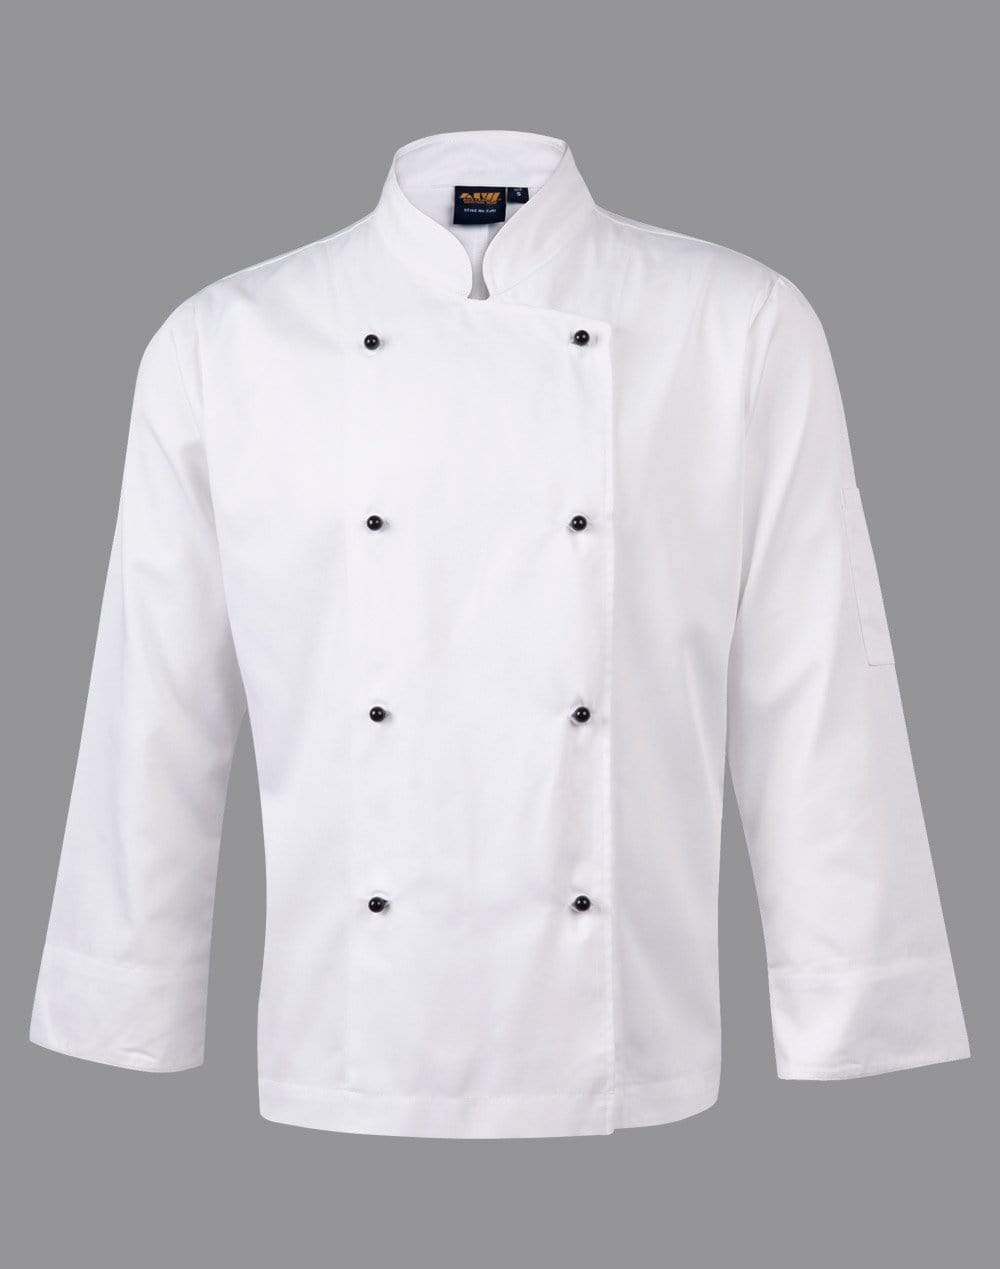 Chef's Long Sleeve Jacket CJ01 Hospitality & Chefwear Australian Industrial Wear S White 